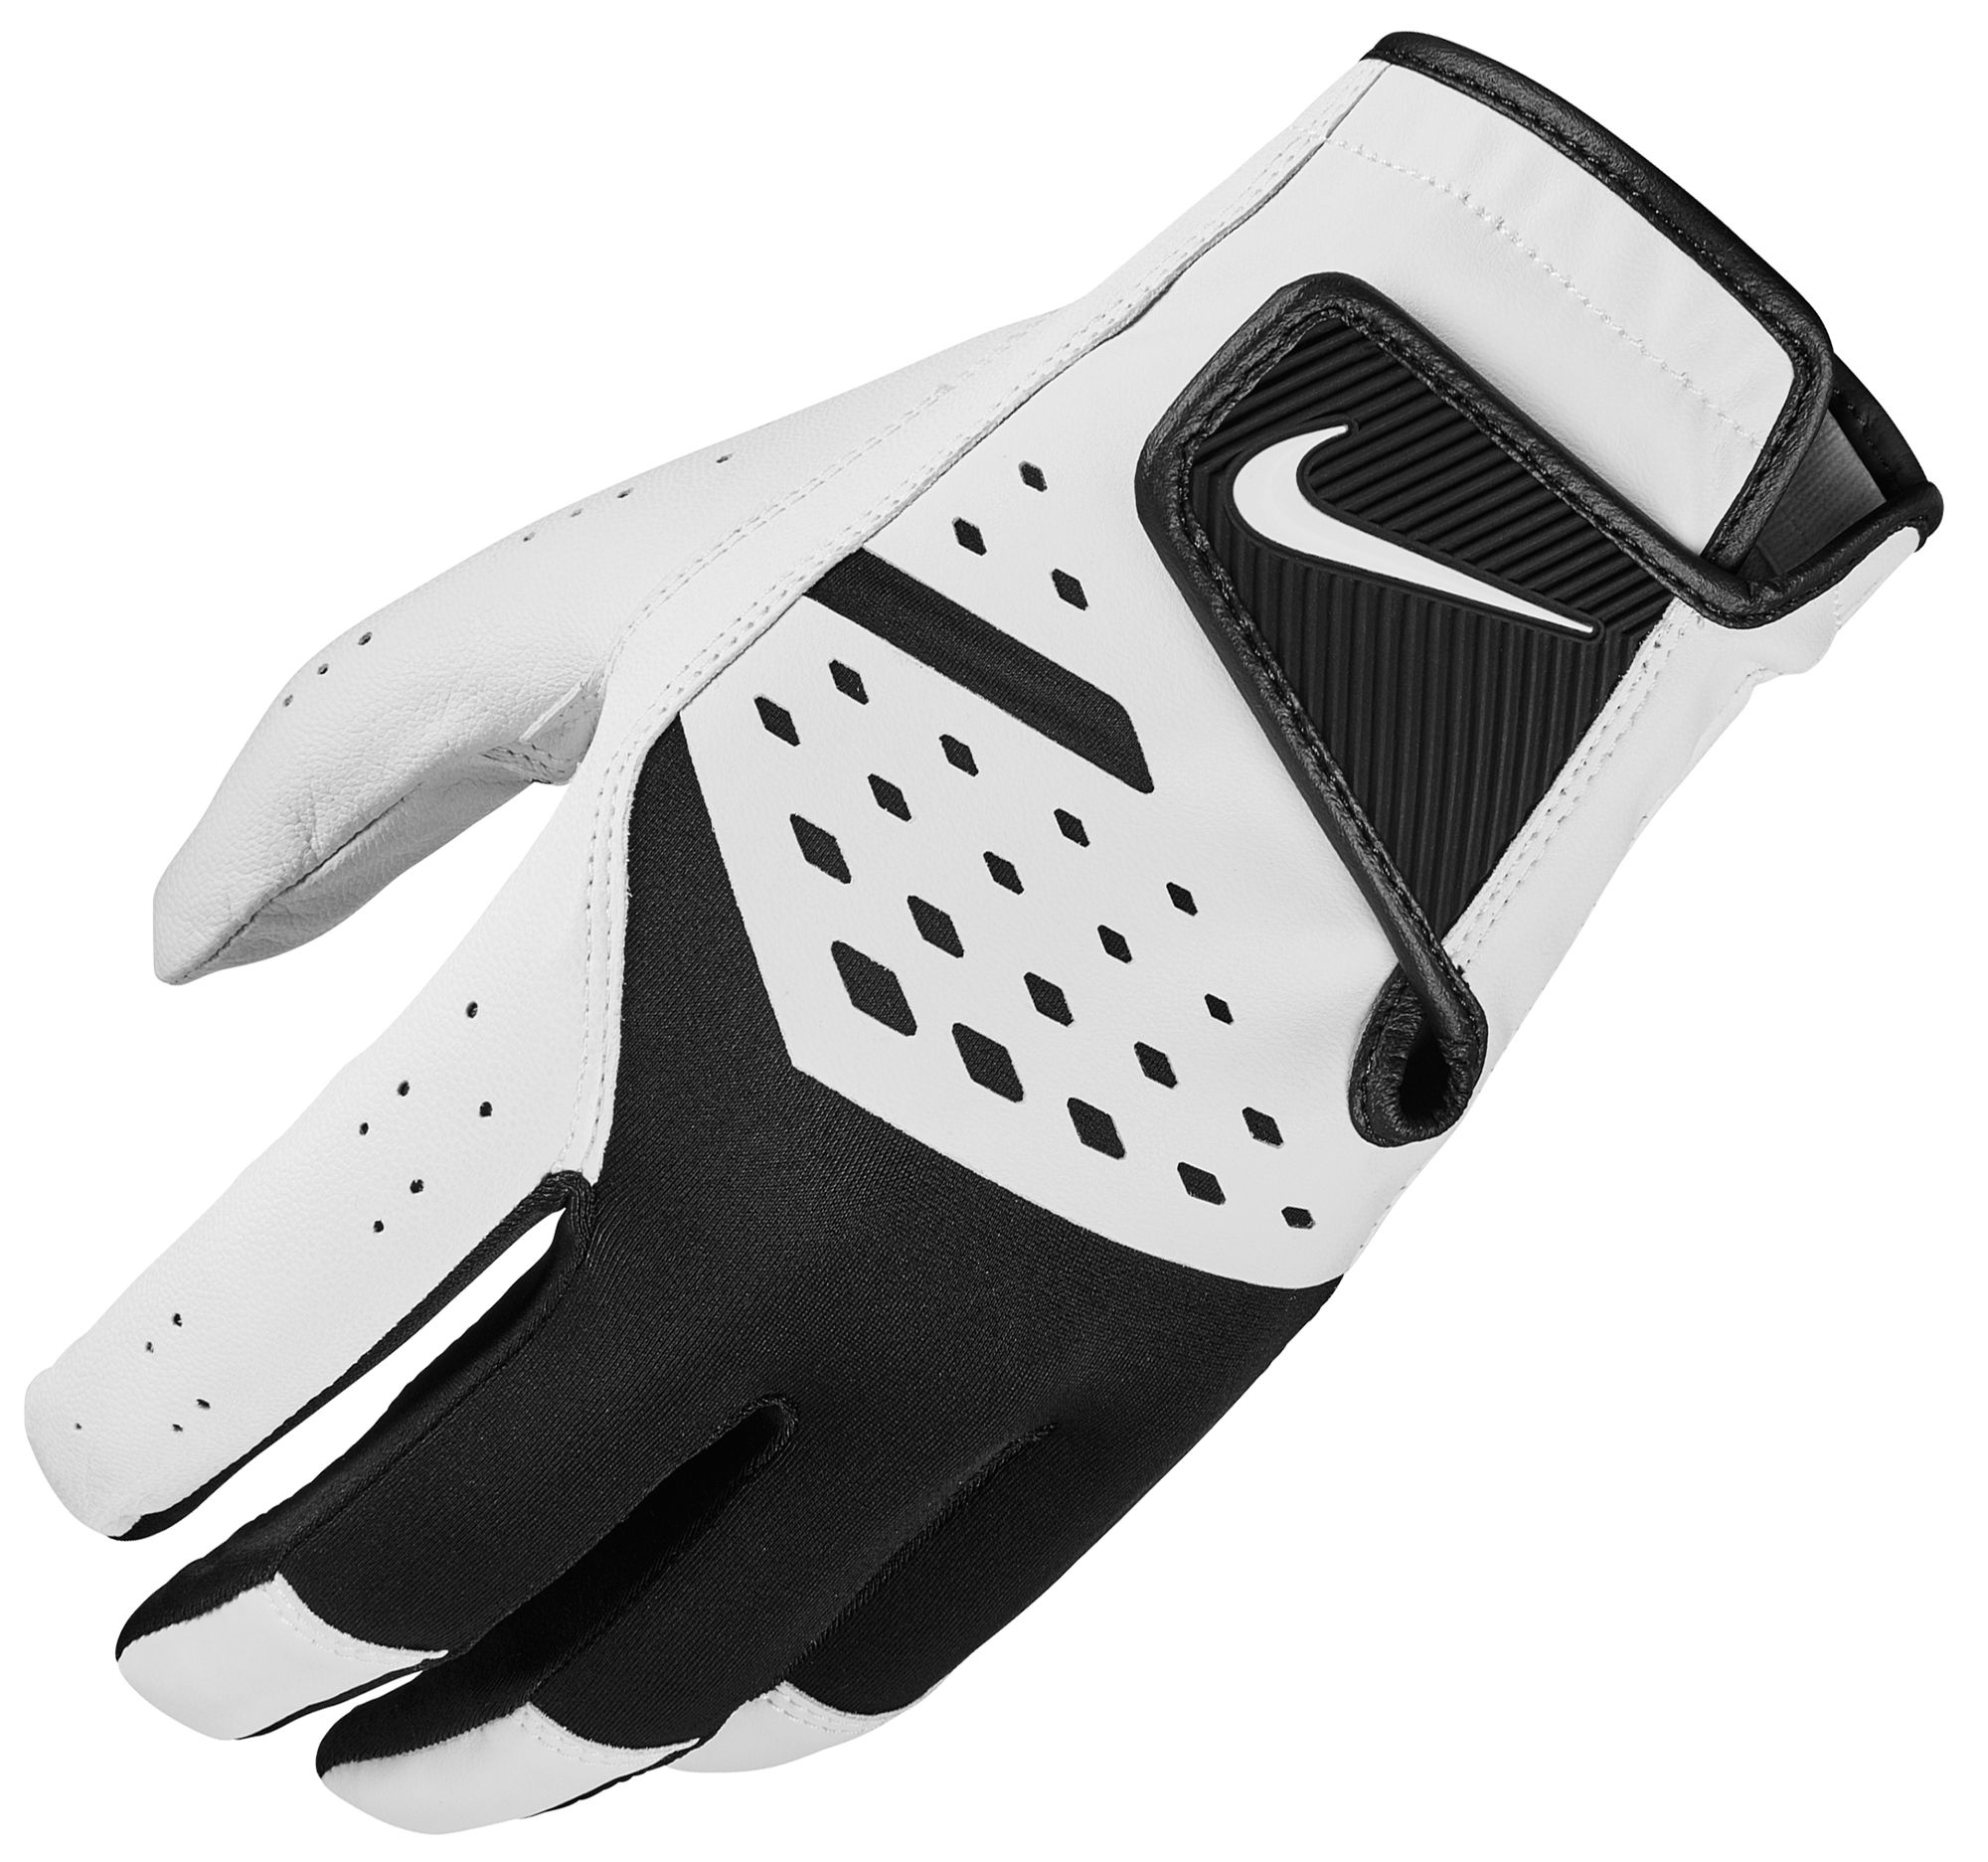 Nike Men's Tech Extreme VII Golf Glove 